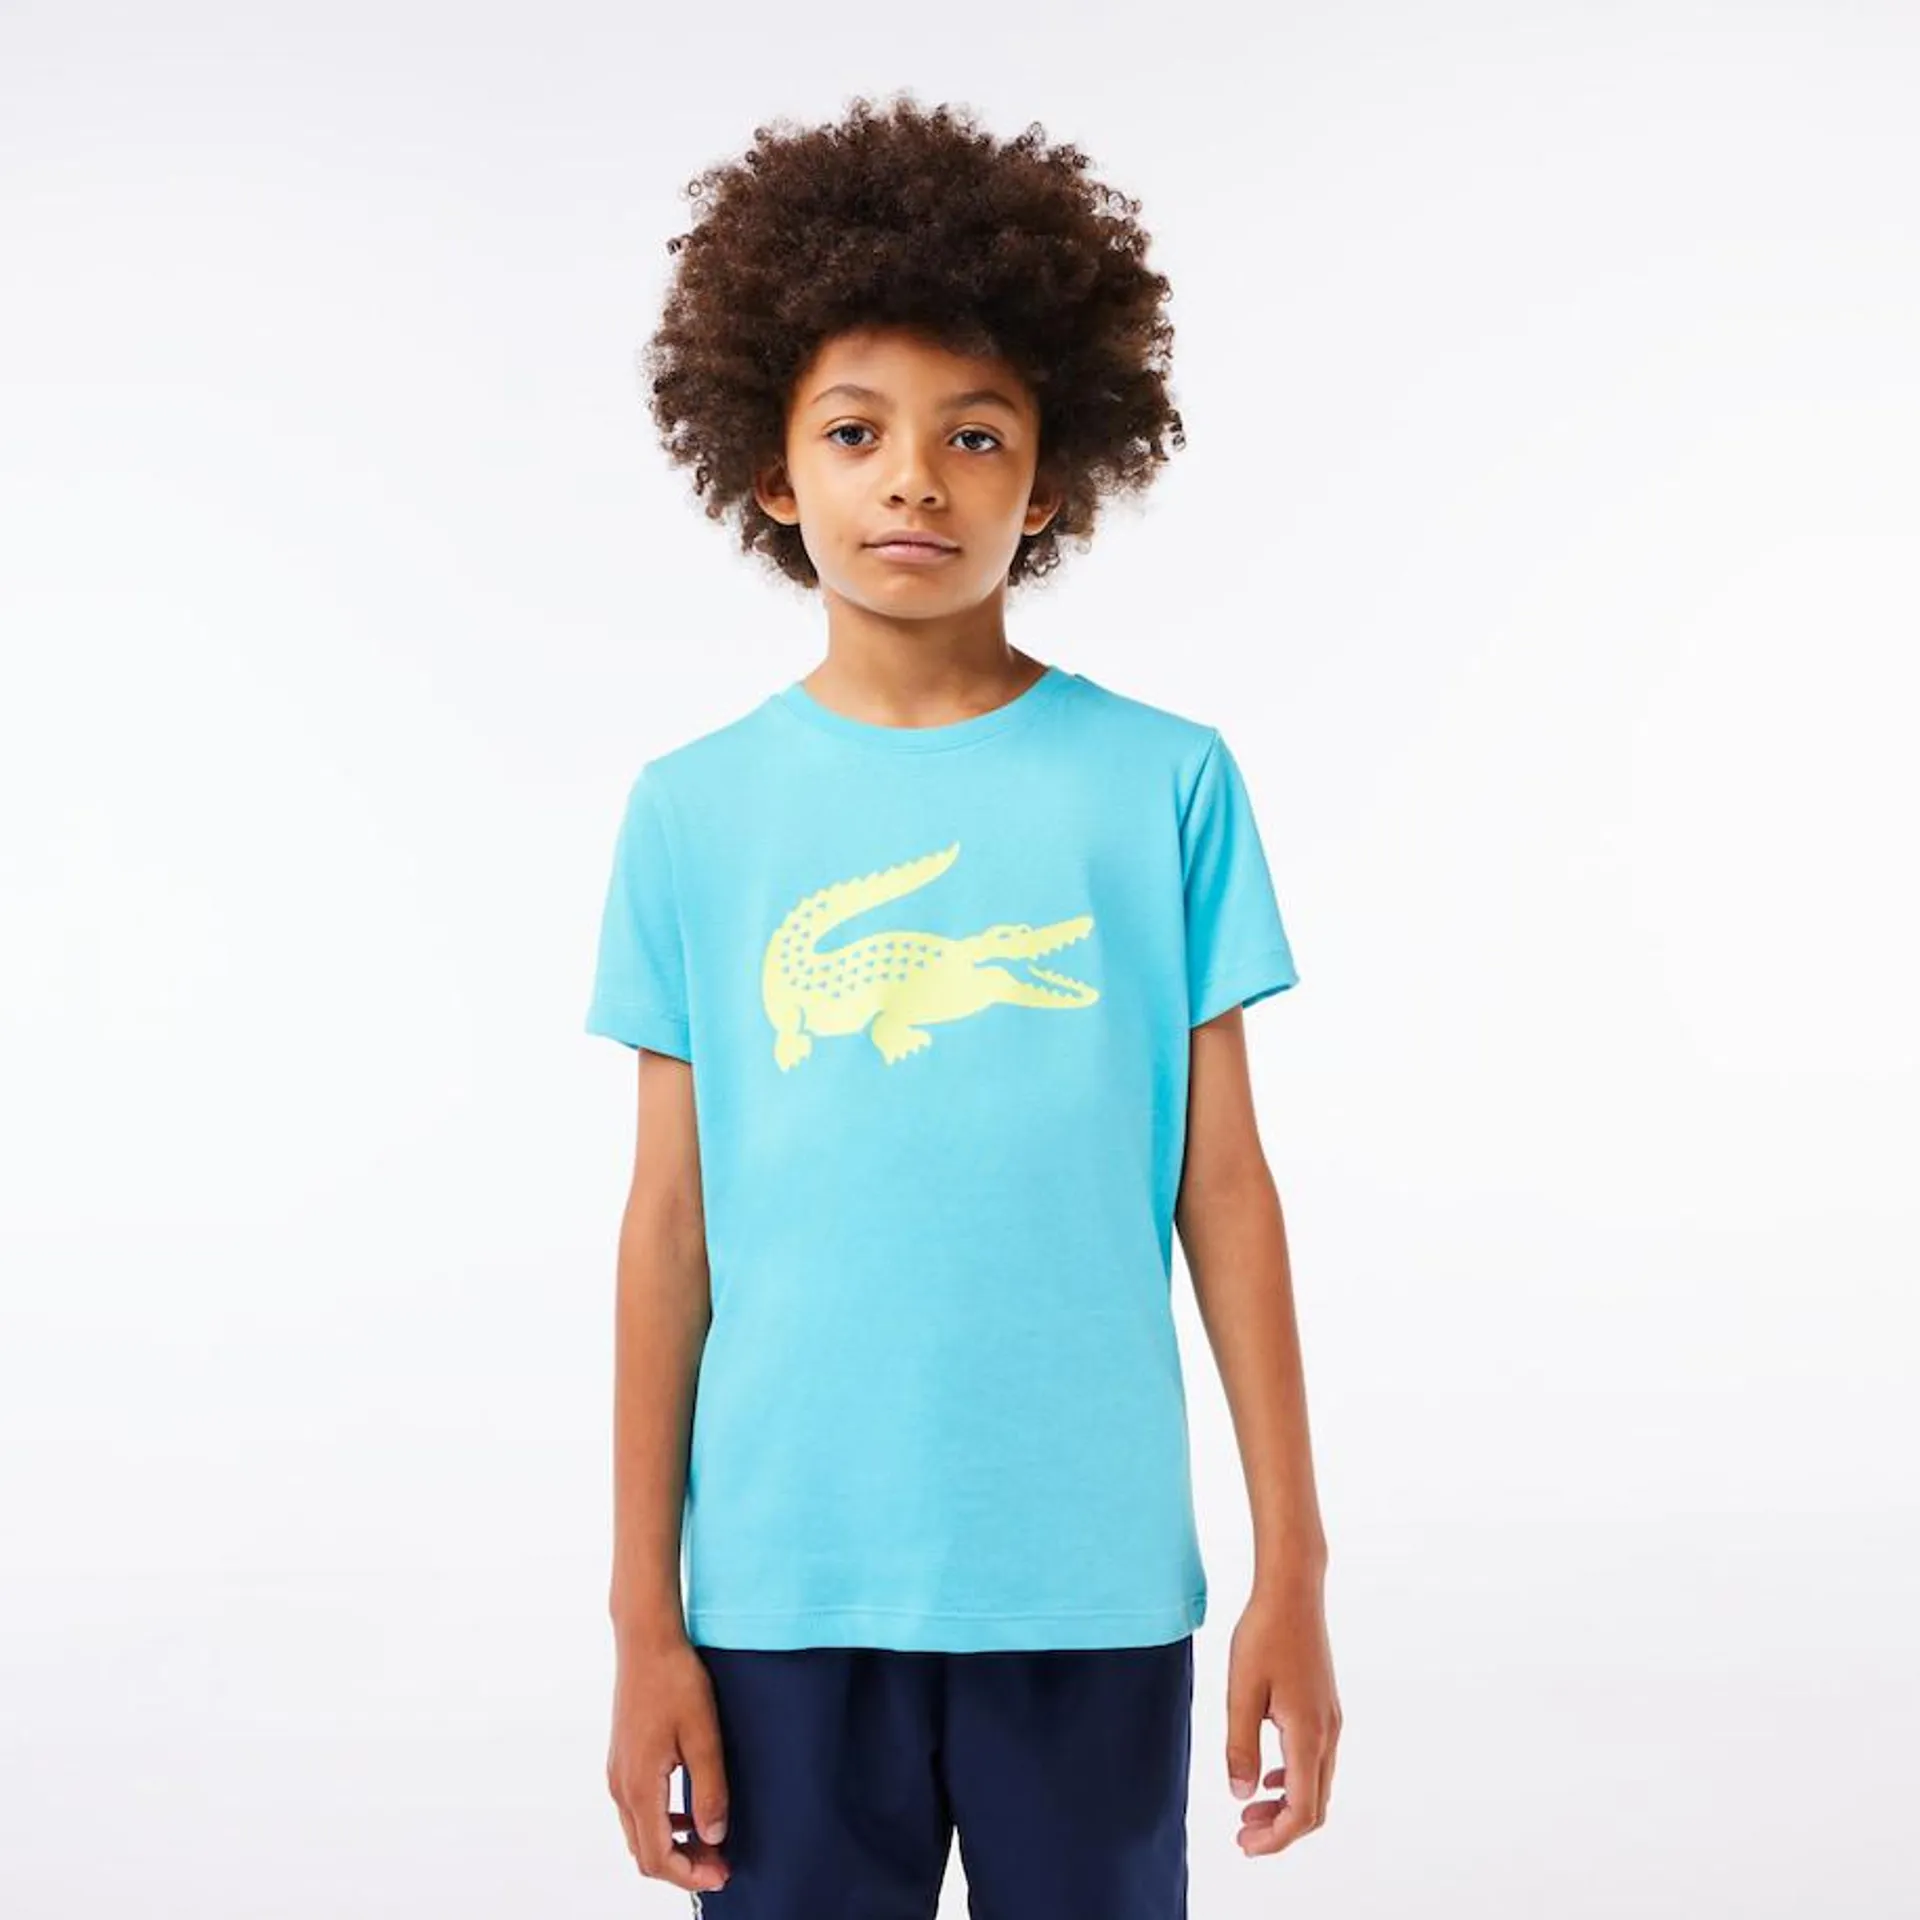 Camiseta infantil de tejido de punto técnico con gran cocodrilo Lacoste SPORT Tennis